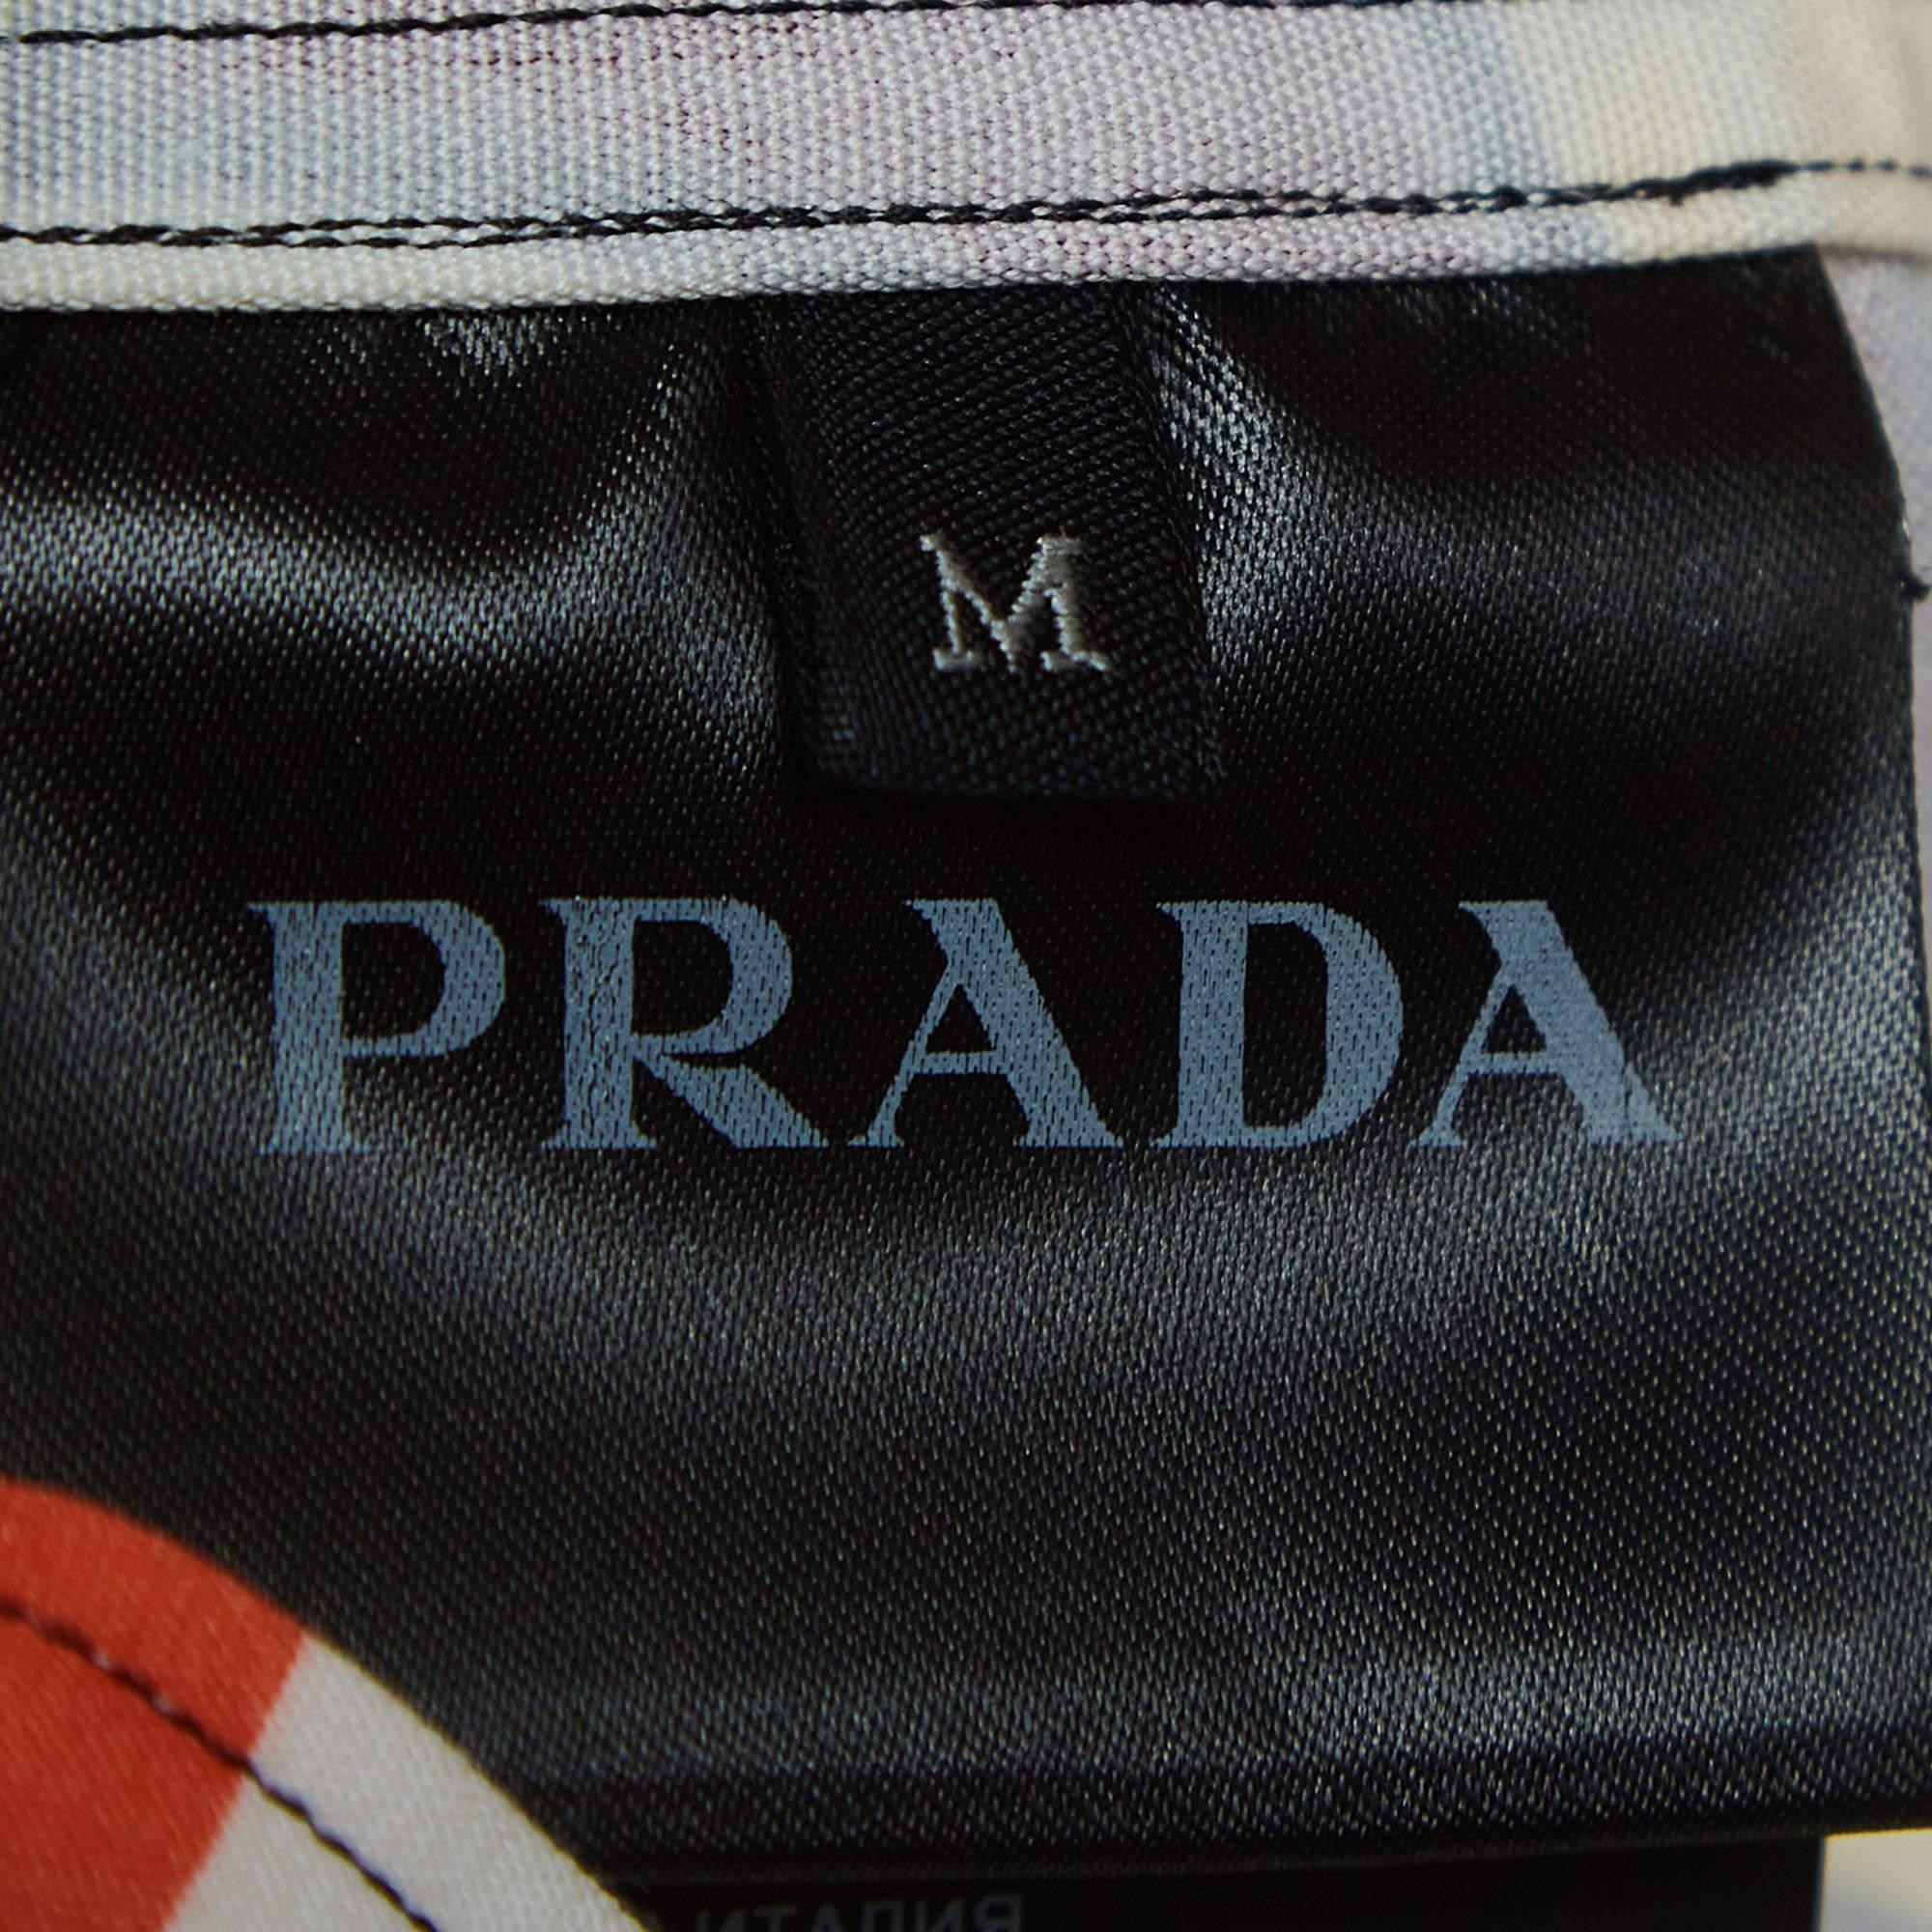 Men's Prada Double Match Multicolor Printed Cotton Short Sleeve Shirt M